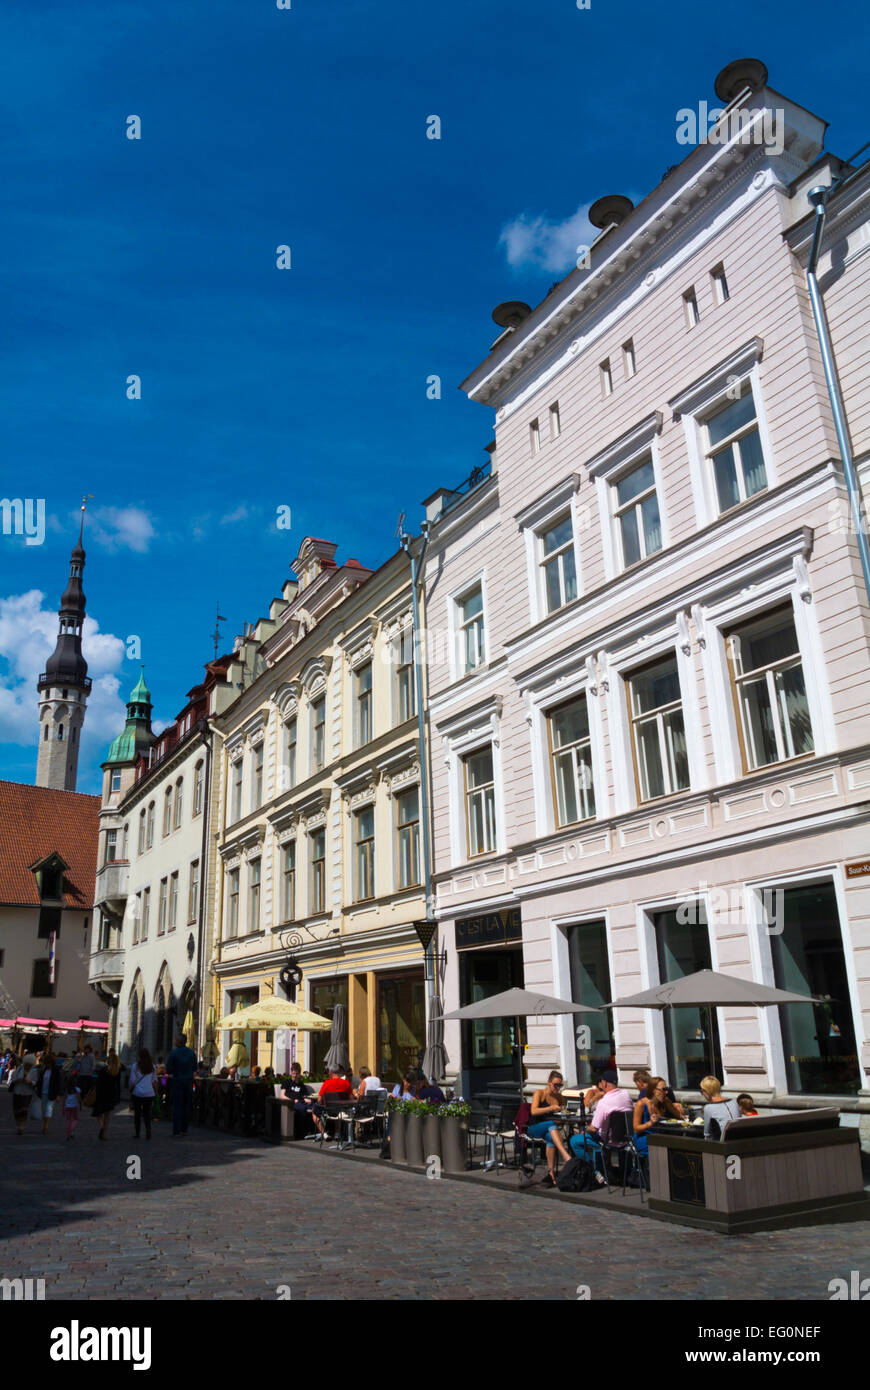 Restaurant terraces, Suur-Karja street, old town, Tallinn, Estonia, Baltic states, Europe Stock Photo